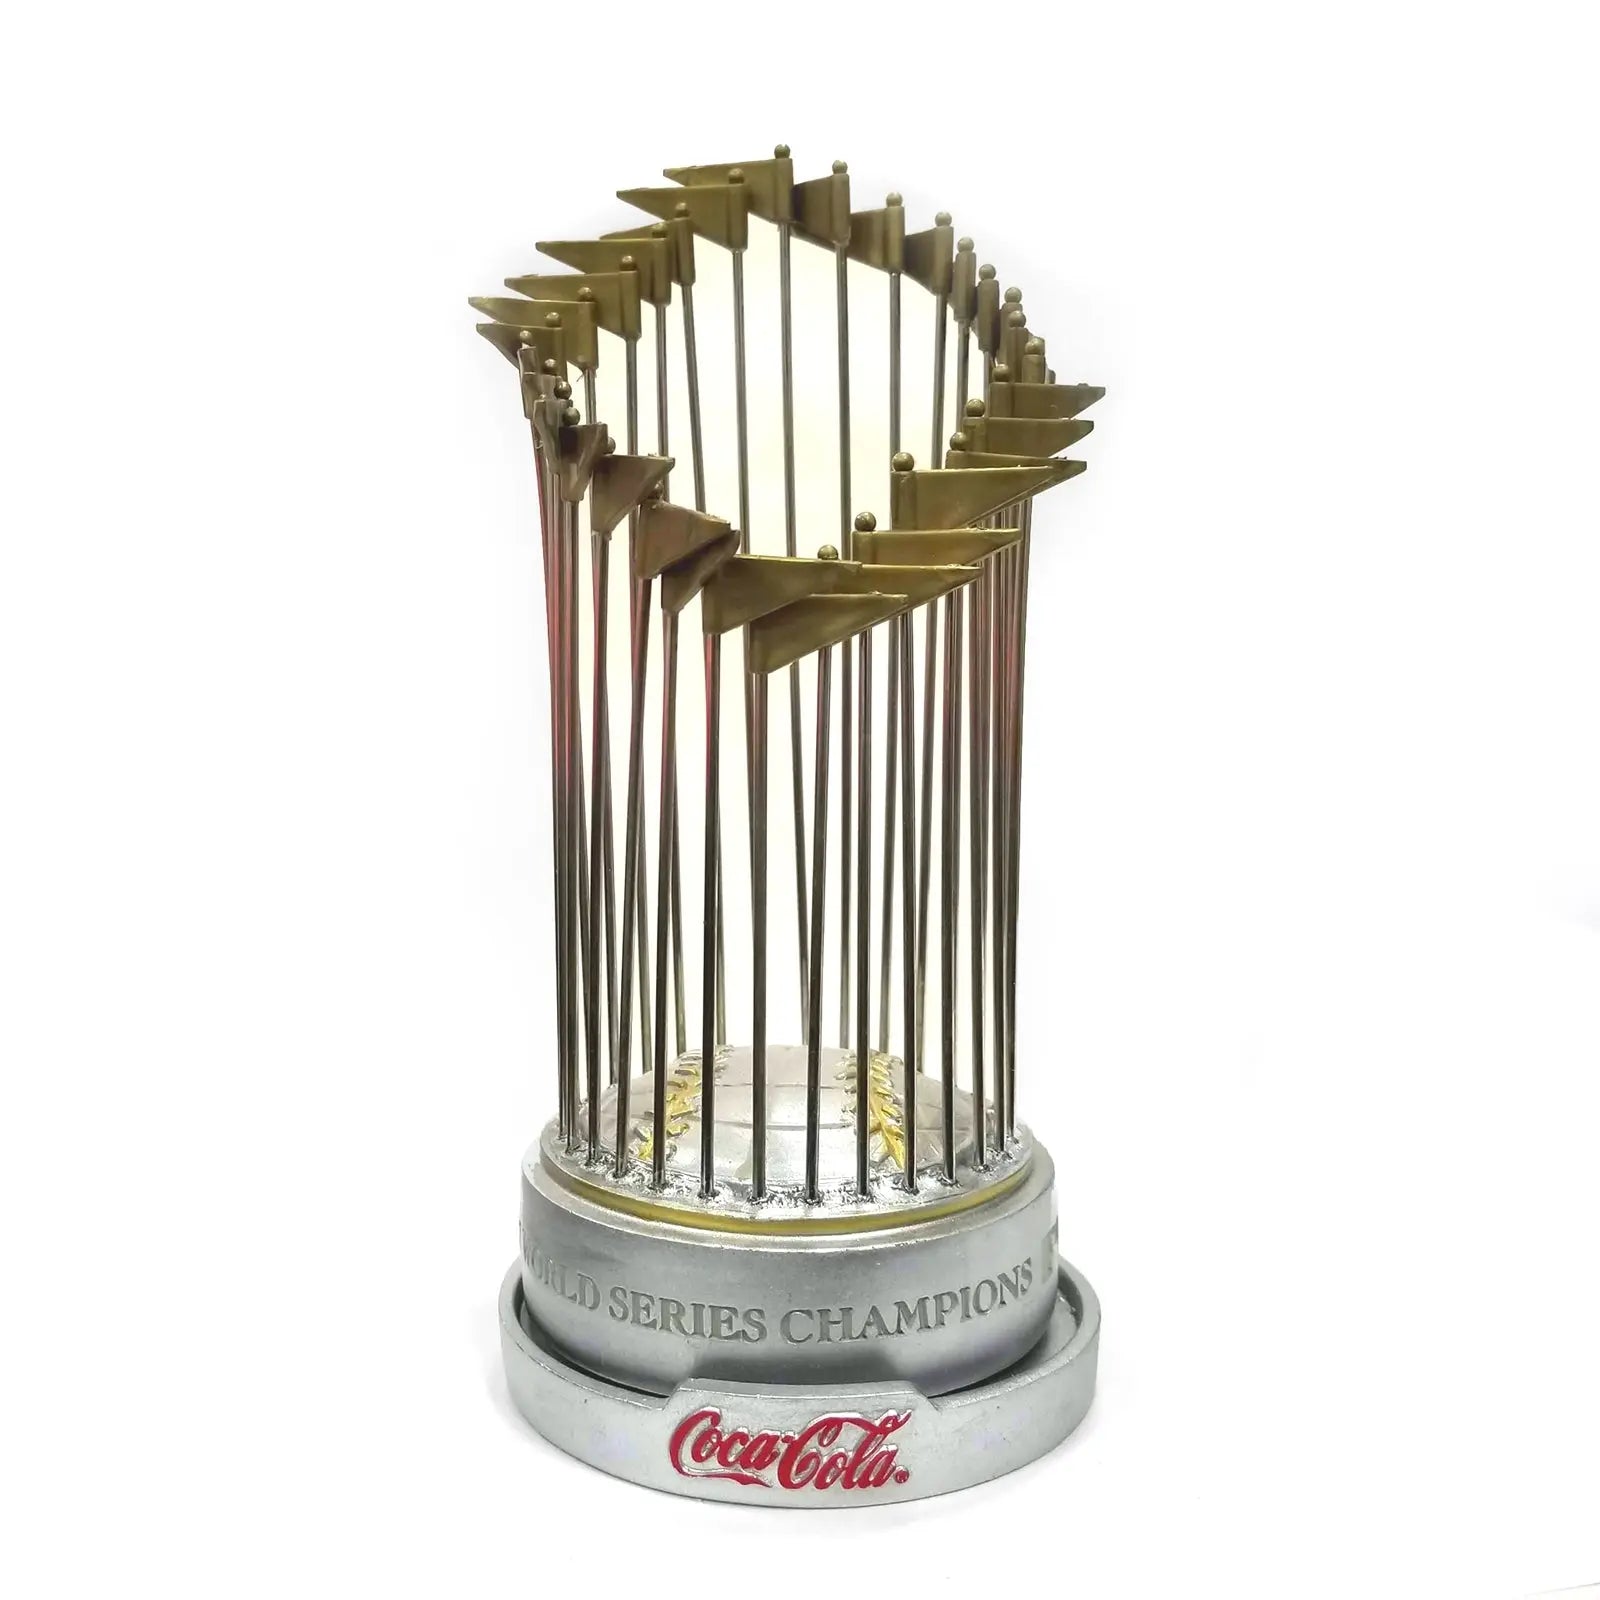 world series trophy replica